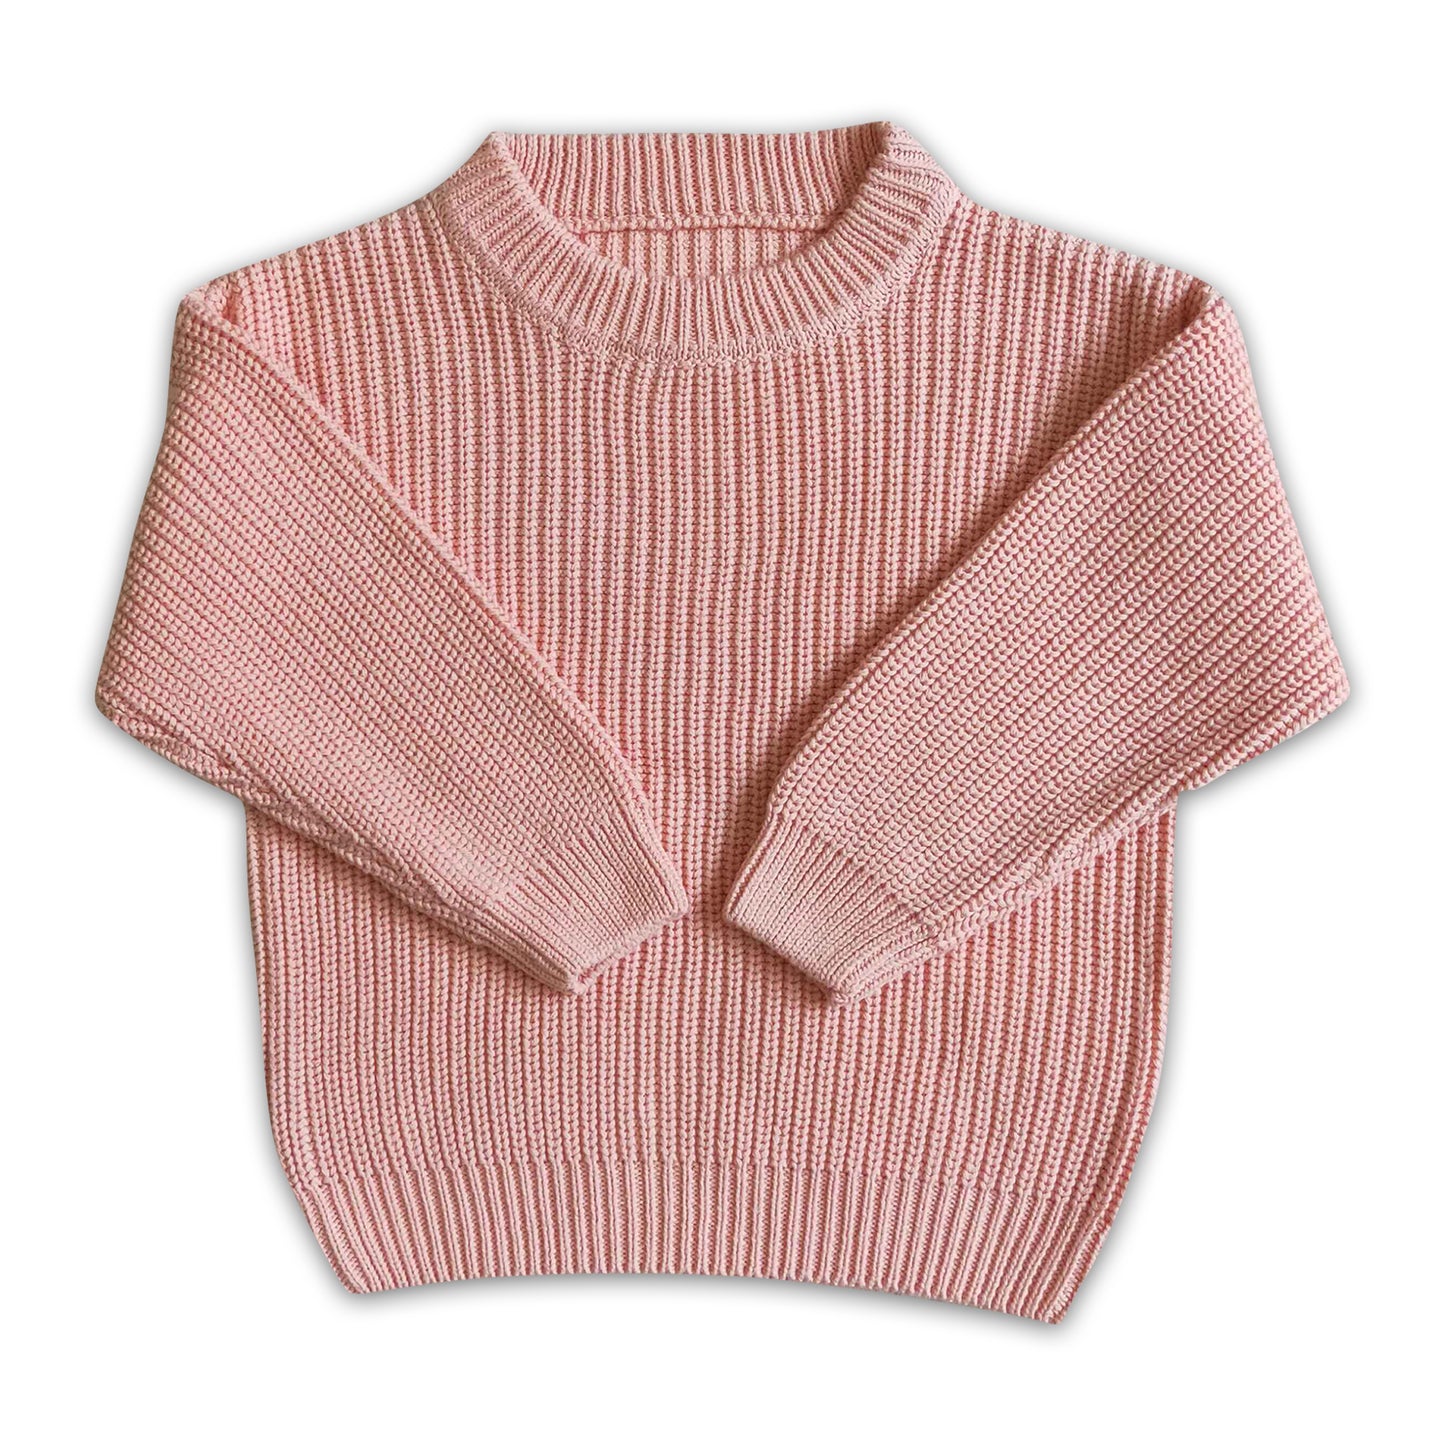 Pink cotton winter sweater